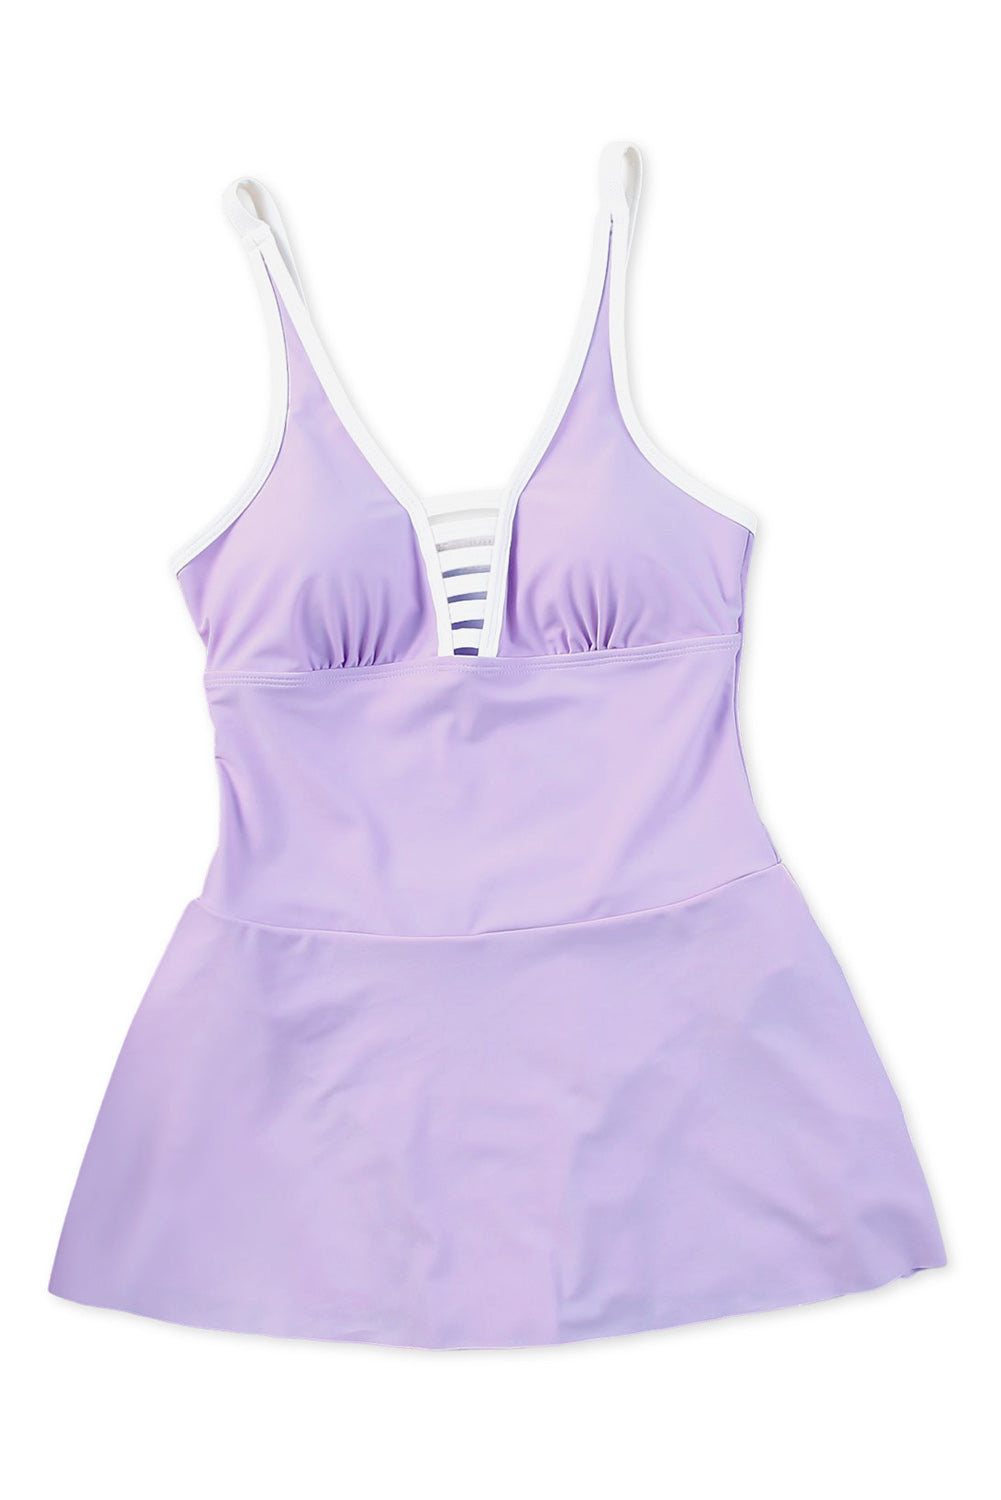 LC443469-8-S, LC443469-8-M, LC443469-8-L, LC443469-8-XL, LC443469-8-2XL, Purple Women's One Piece Swimdress Skirted Strappy V Neck Side Split One-piece Bathing Suit